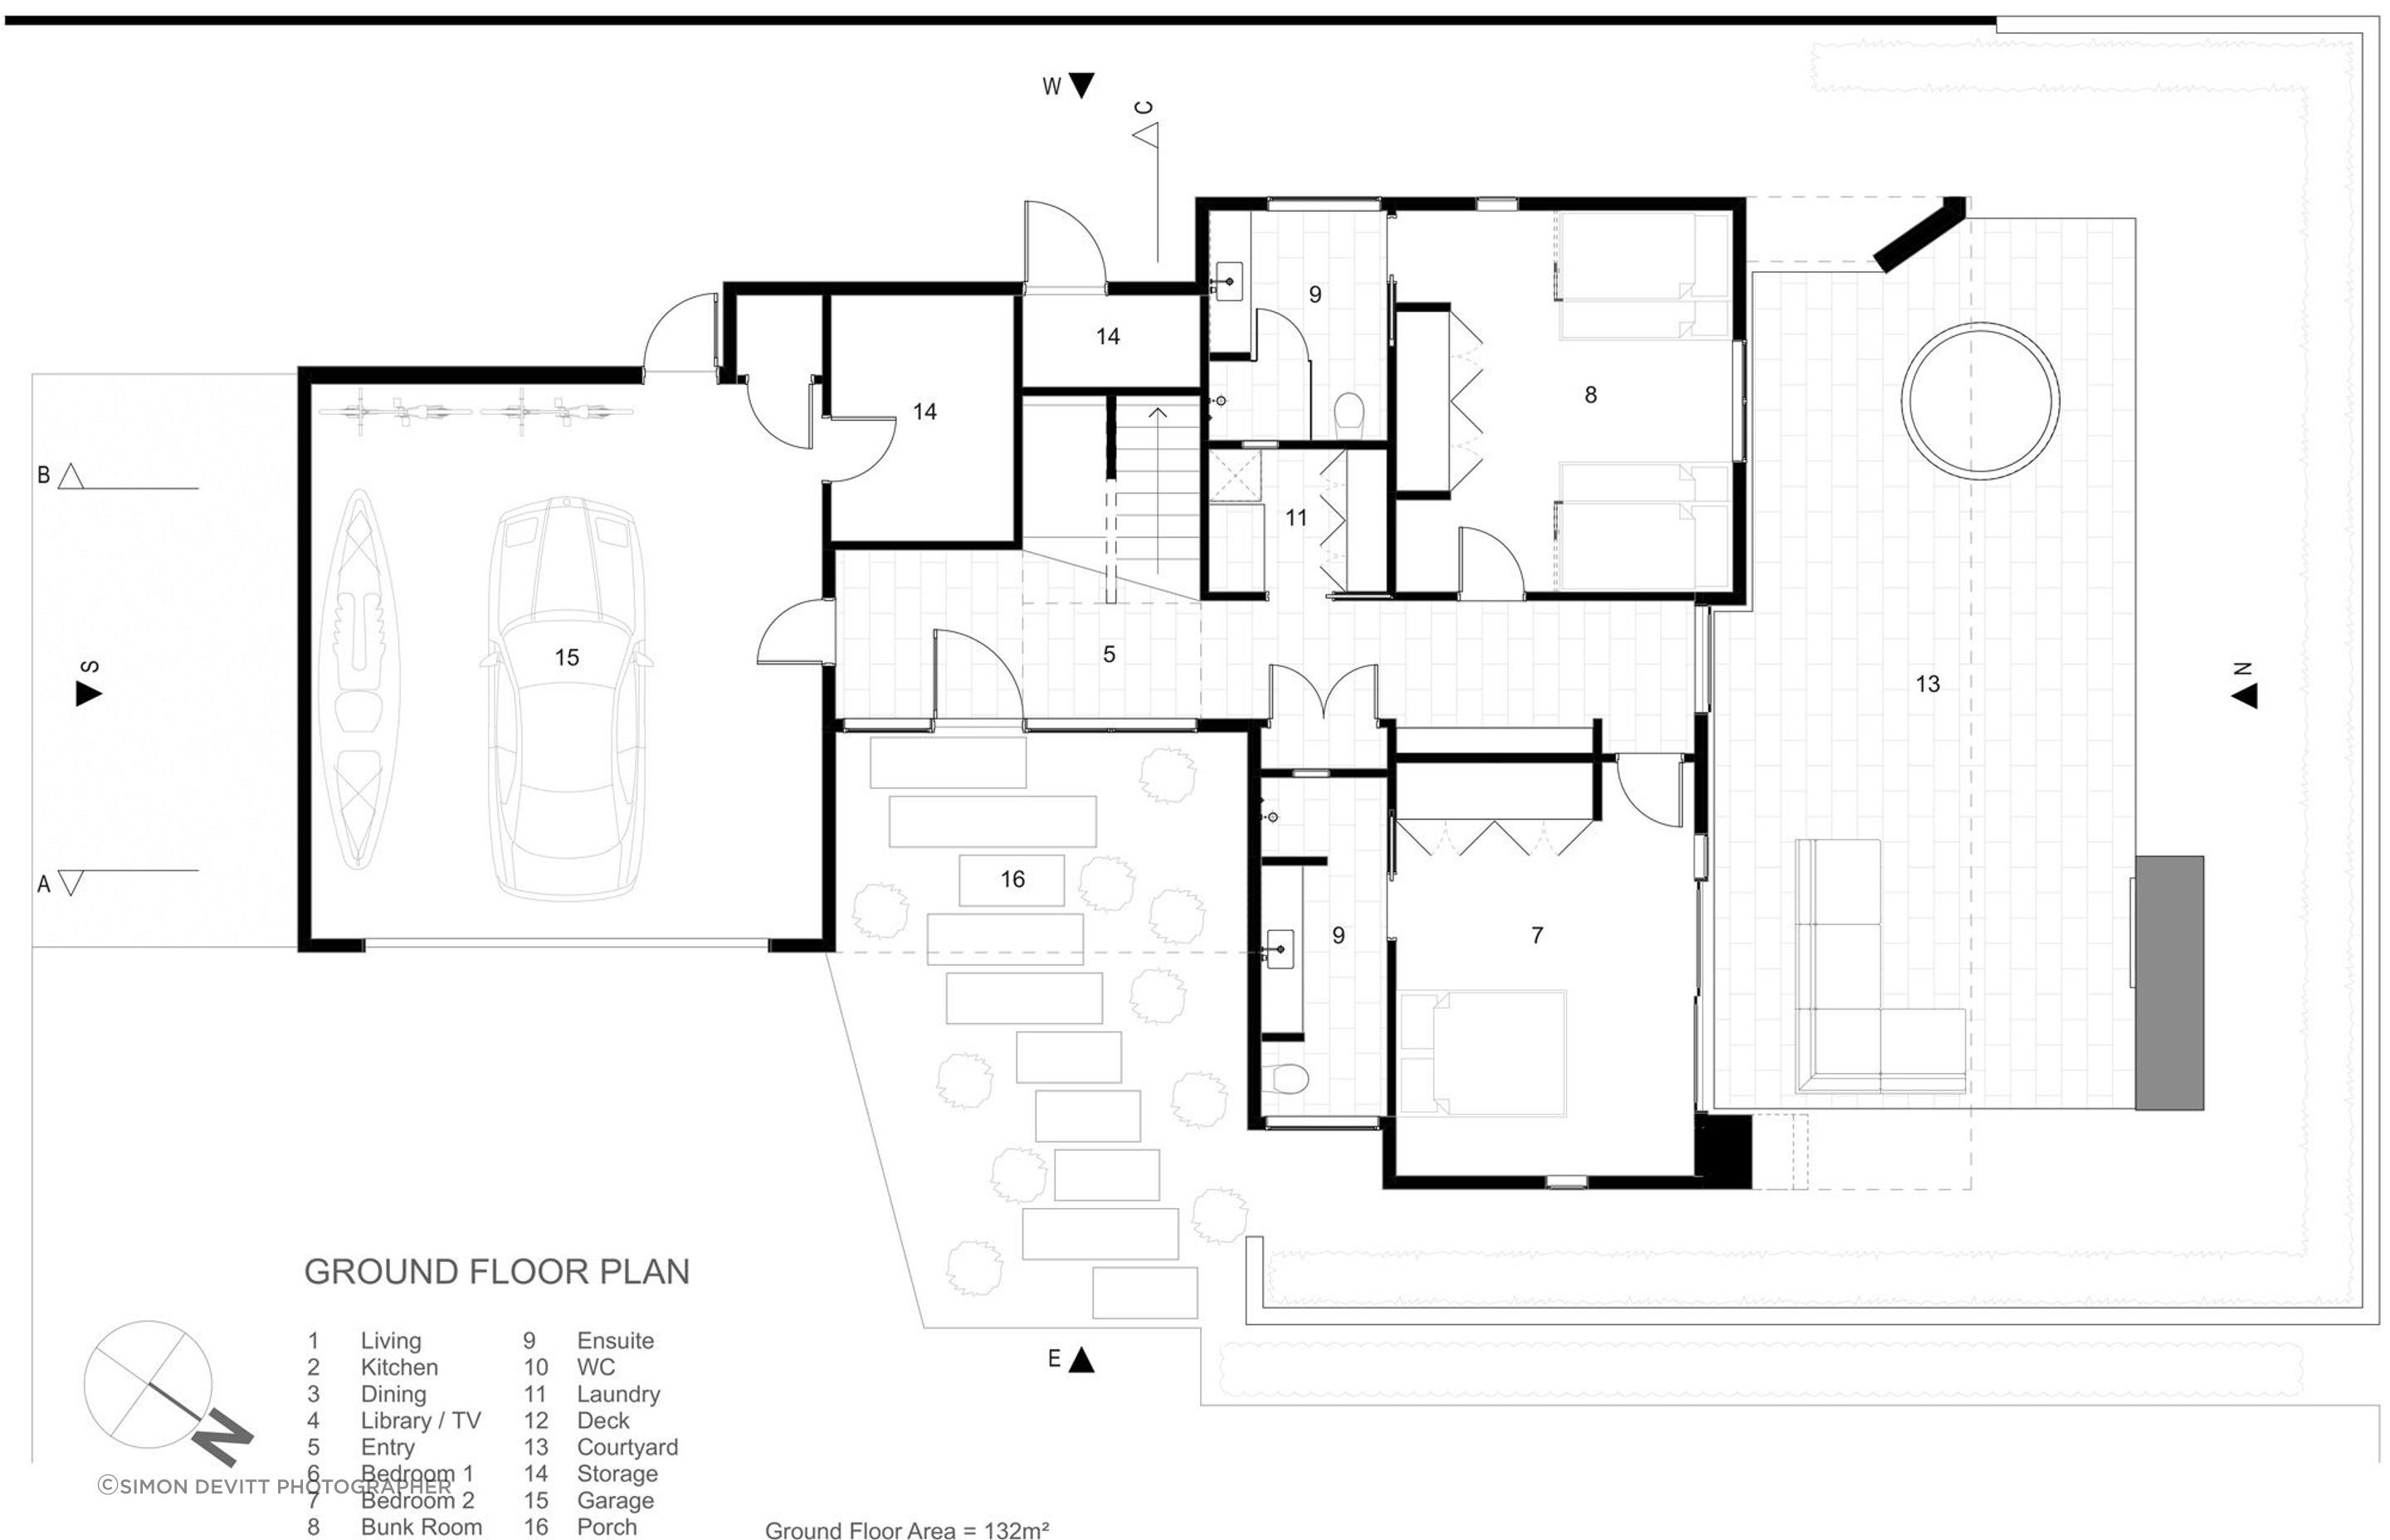 The ground-floor plan by Julian Guthrie Architecture.